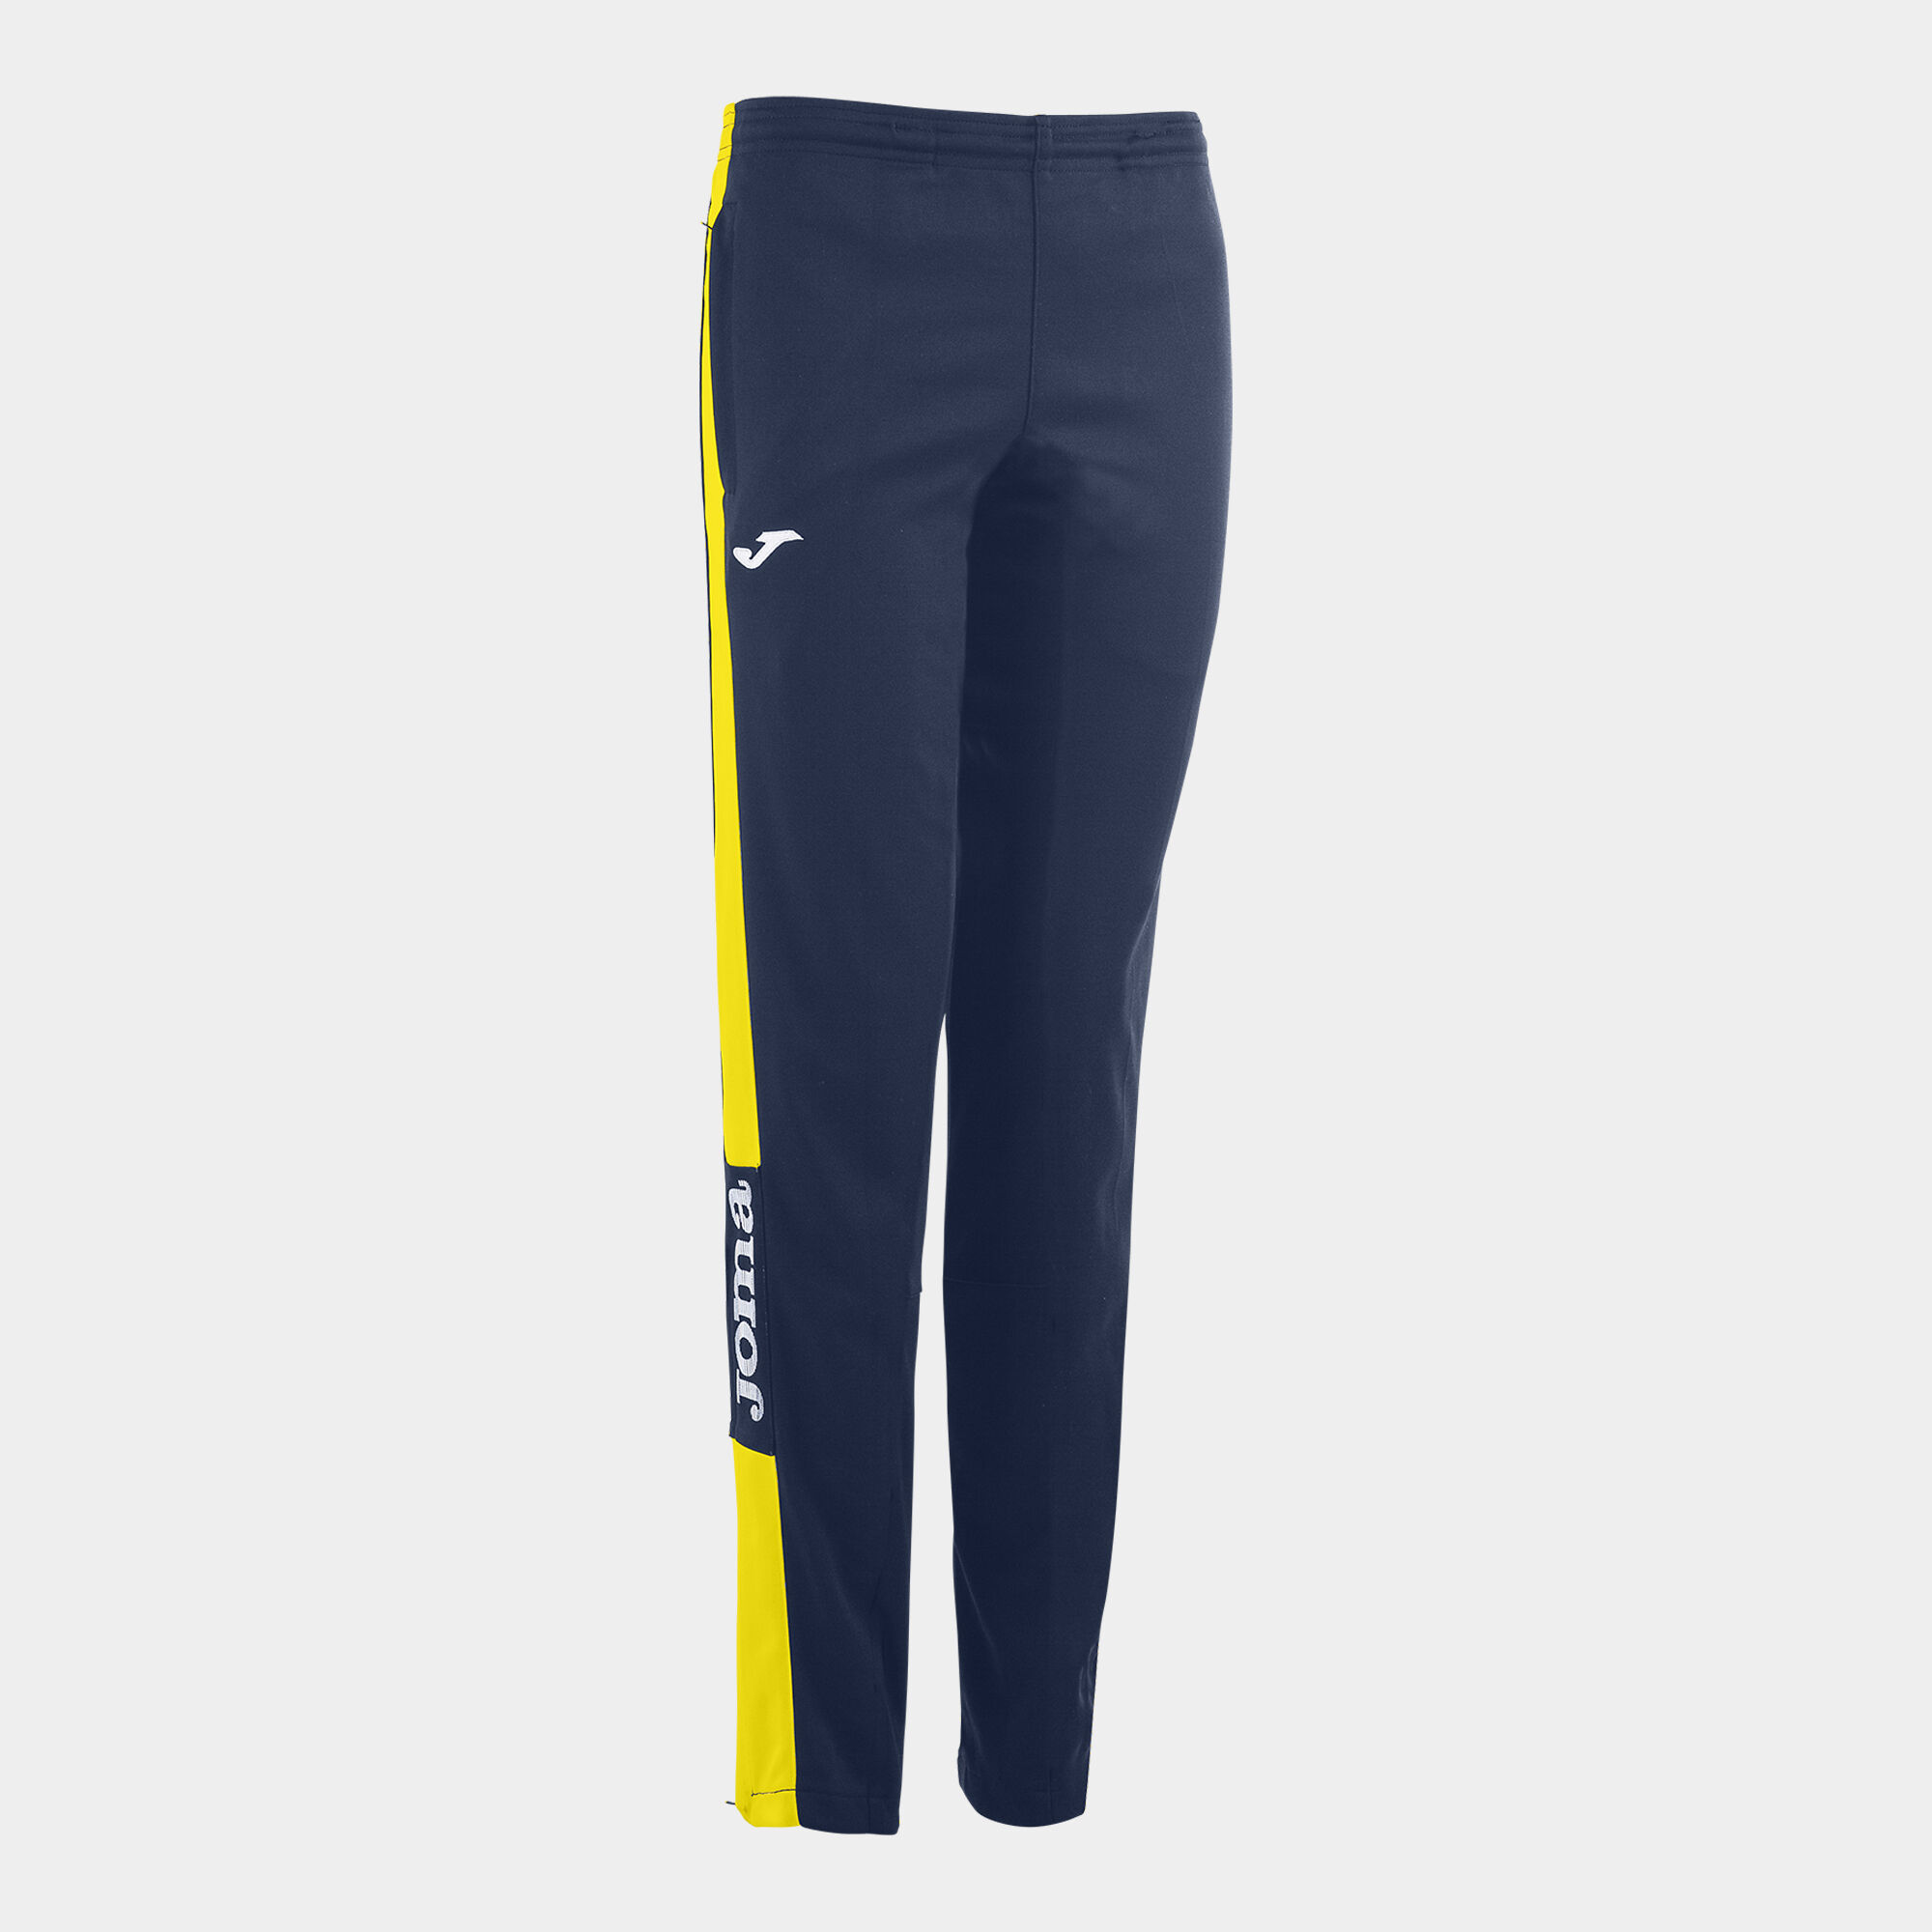 Pantalone lungo donna Championship IV blu navy giallo